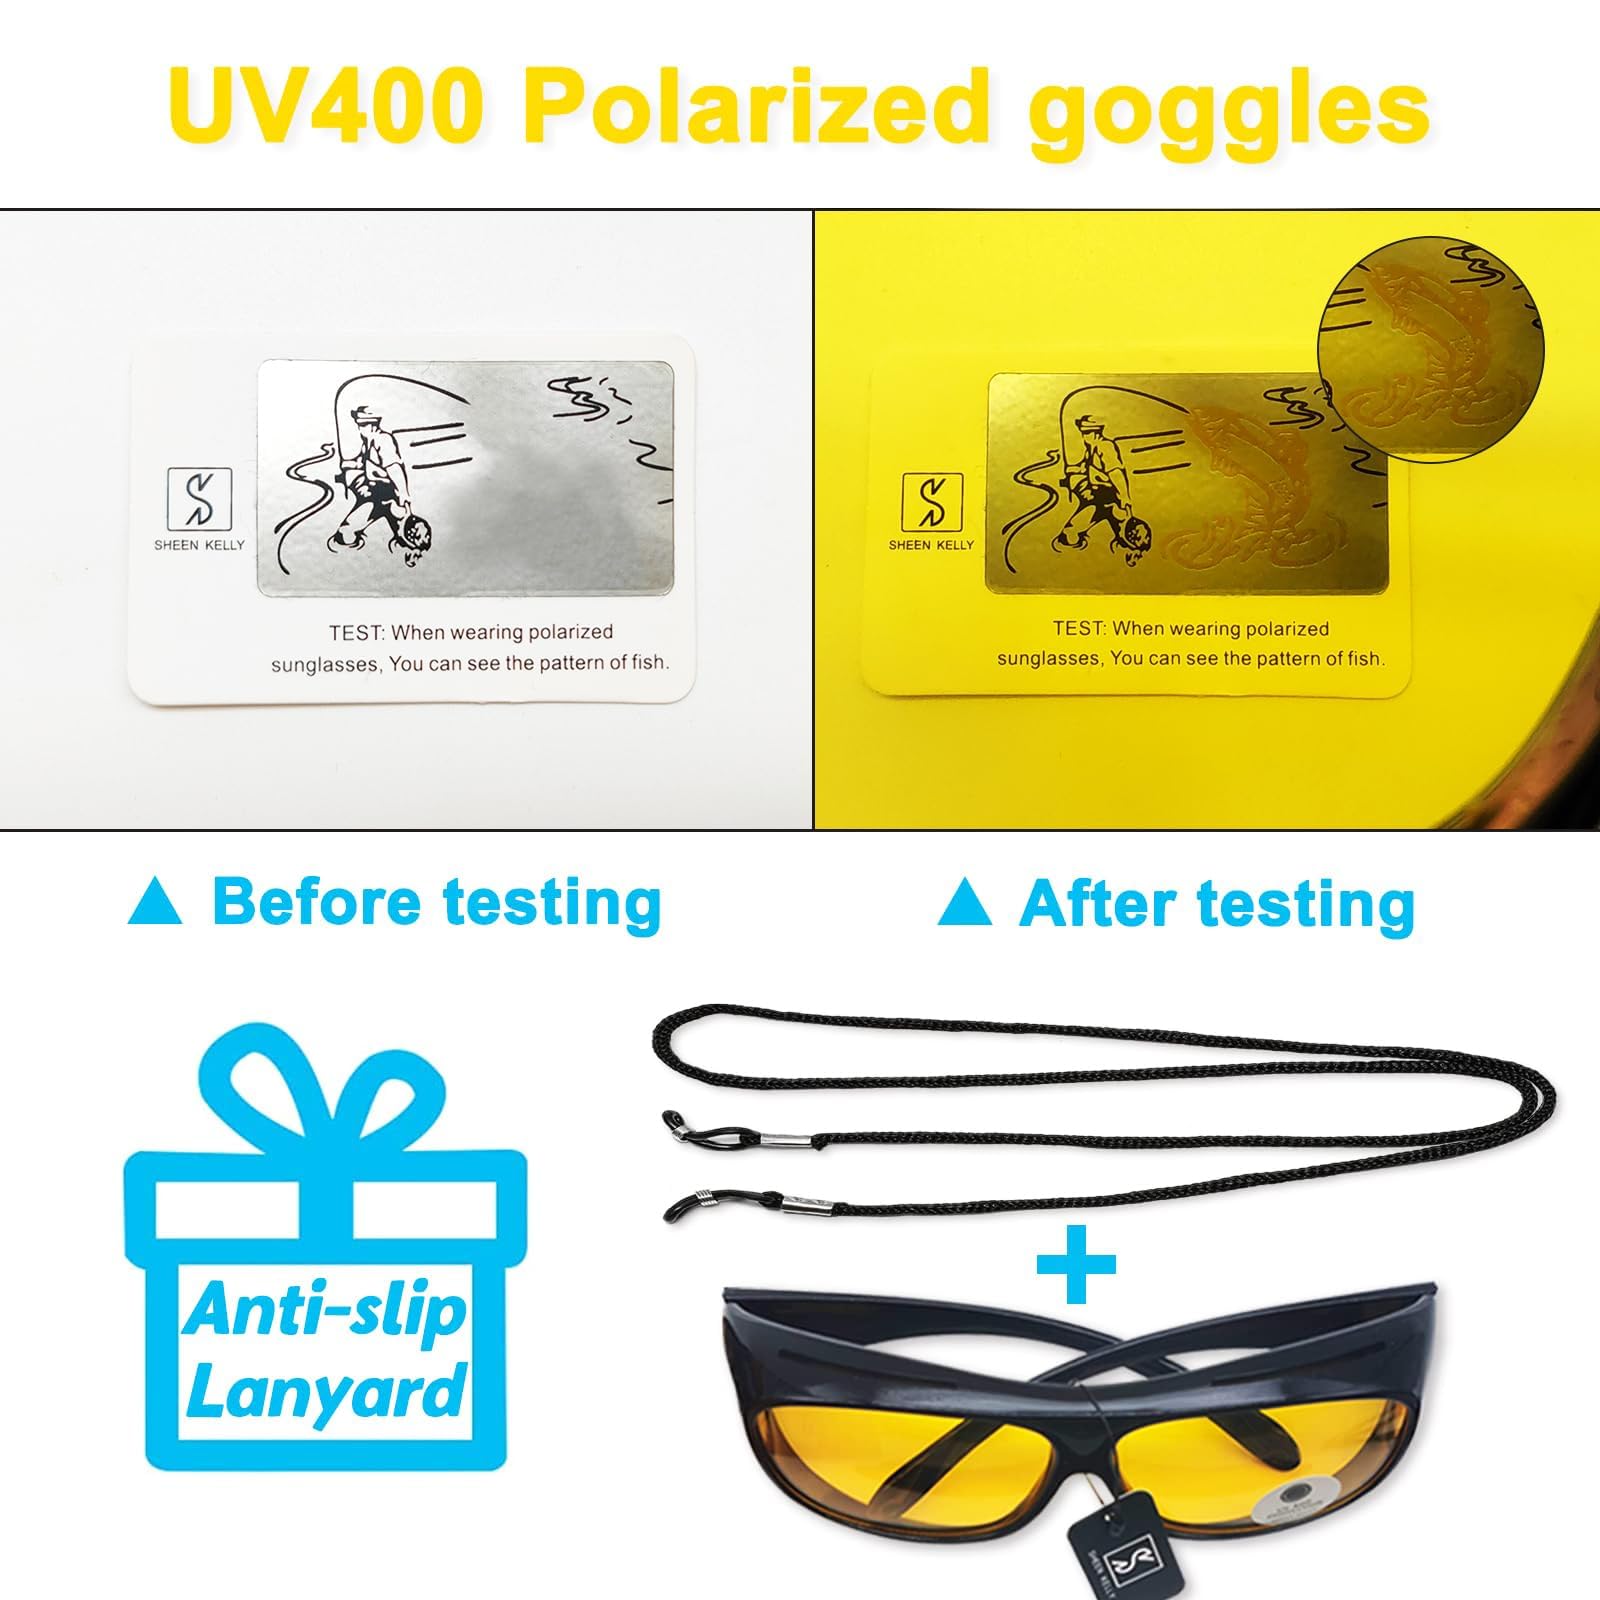 SHEEN KELLY Polarized Night Vision Glasses Driving Men Women Fit Over Prescription Eyewear Wrap Arounds Sunglasses Yellow Lens UV400